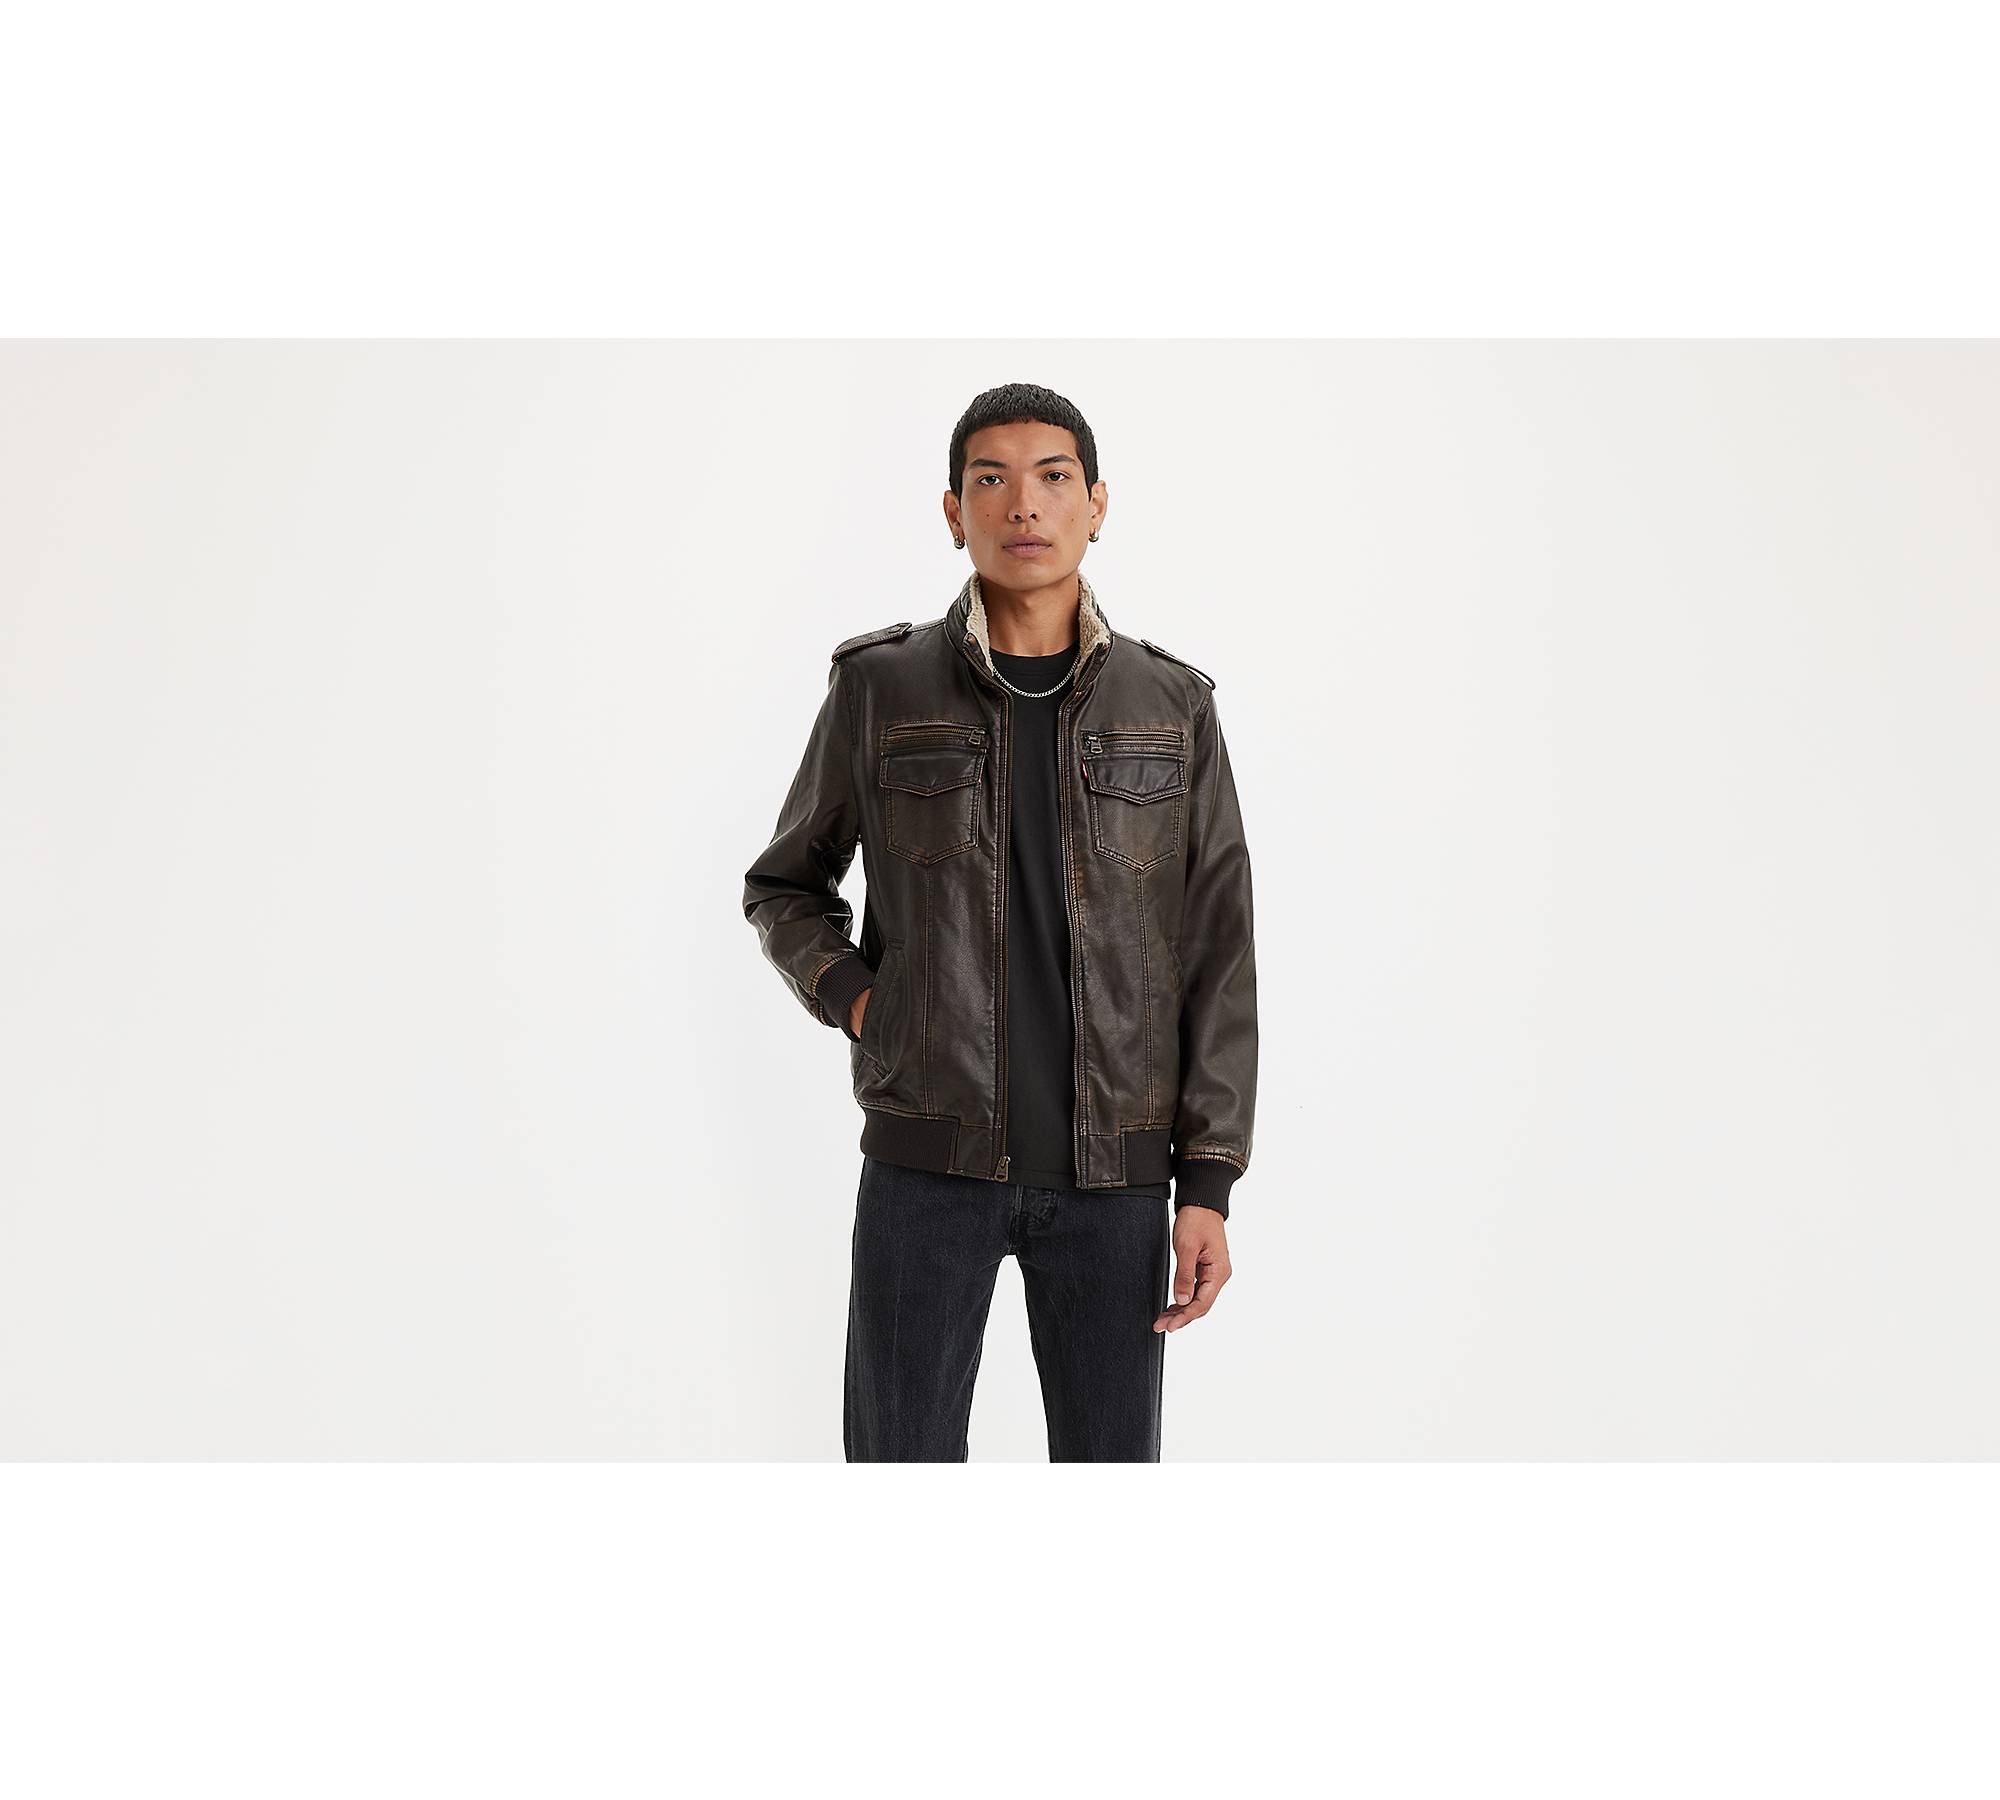 Time and Tru Women's Asymmetrical Faux Leather Jacket, Sizes XS-3X